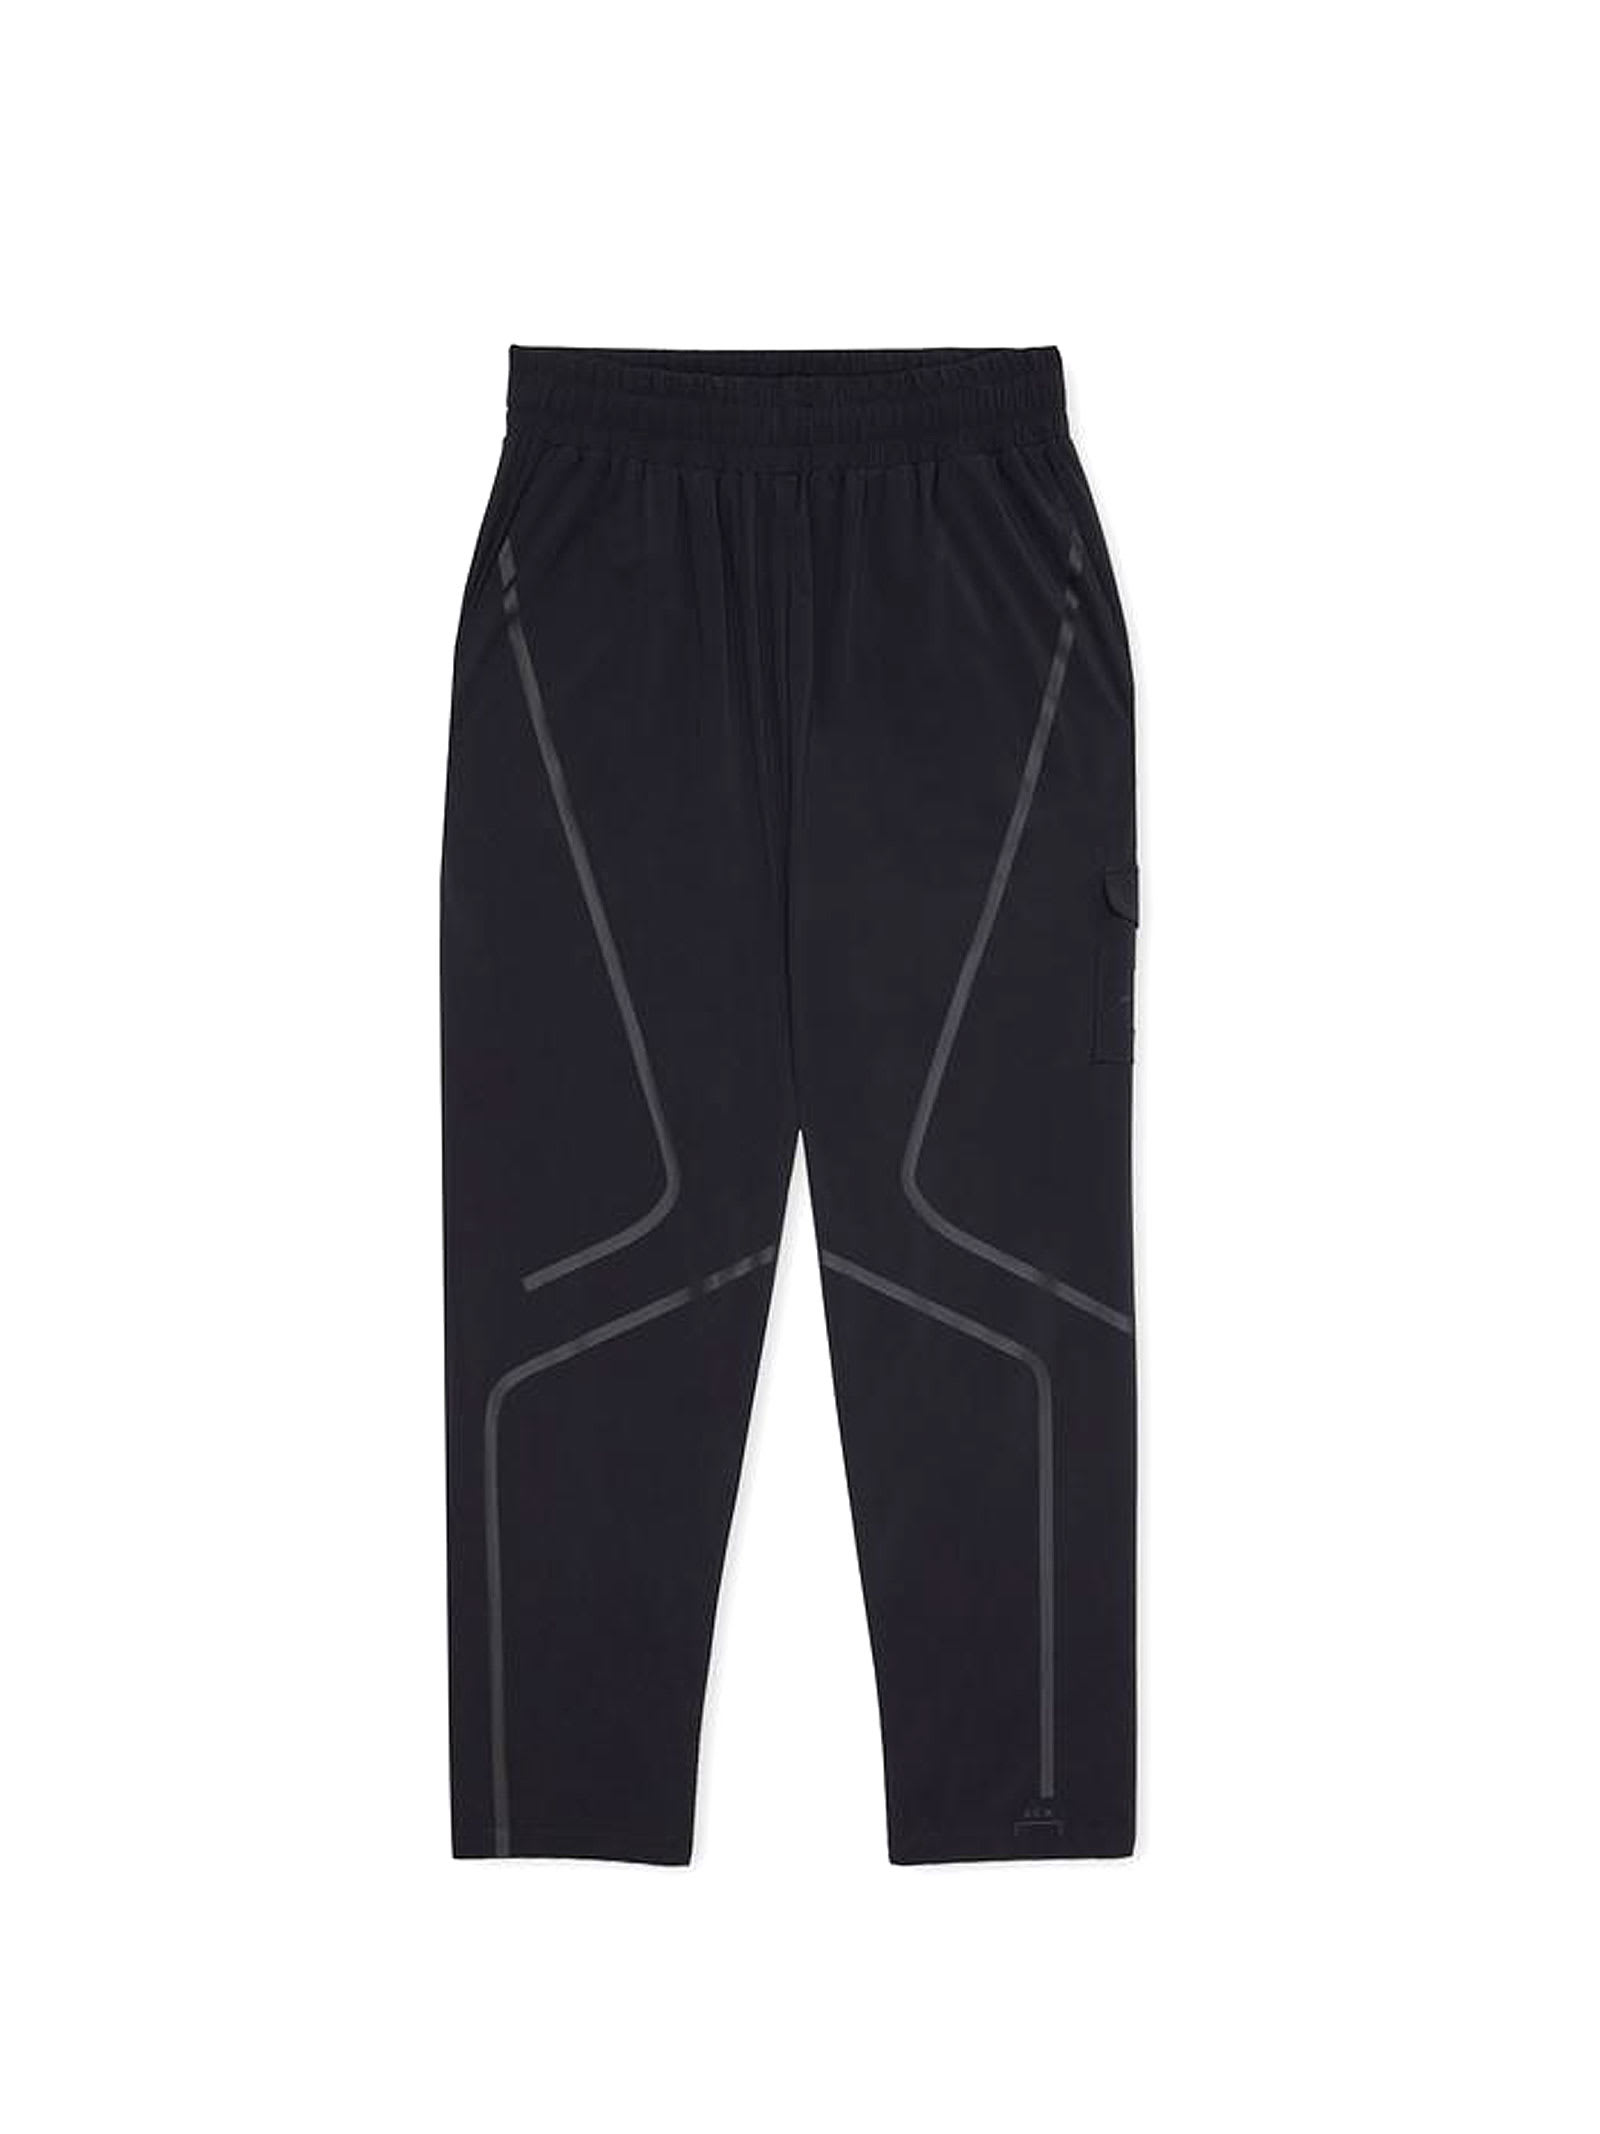 A-COLD-WALL* trousers IN BLACK NYLON,ACWMB046 BLACK